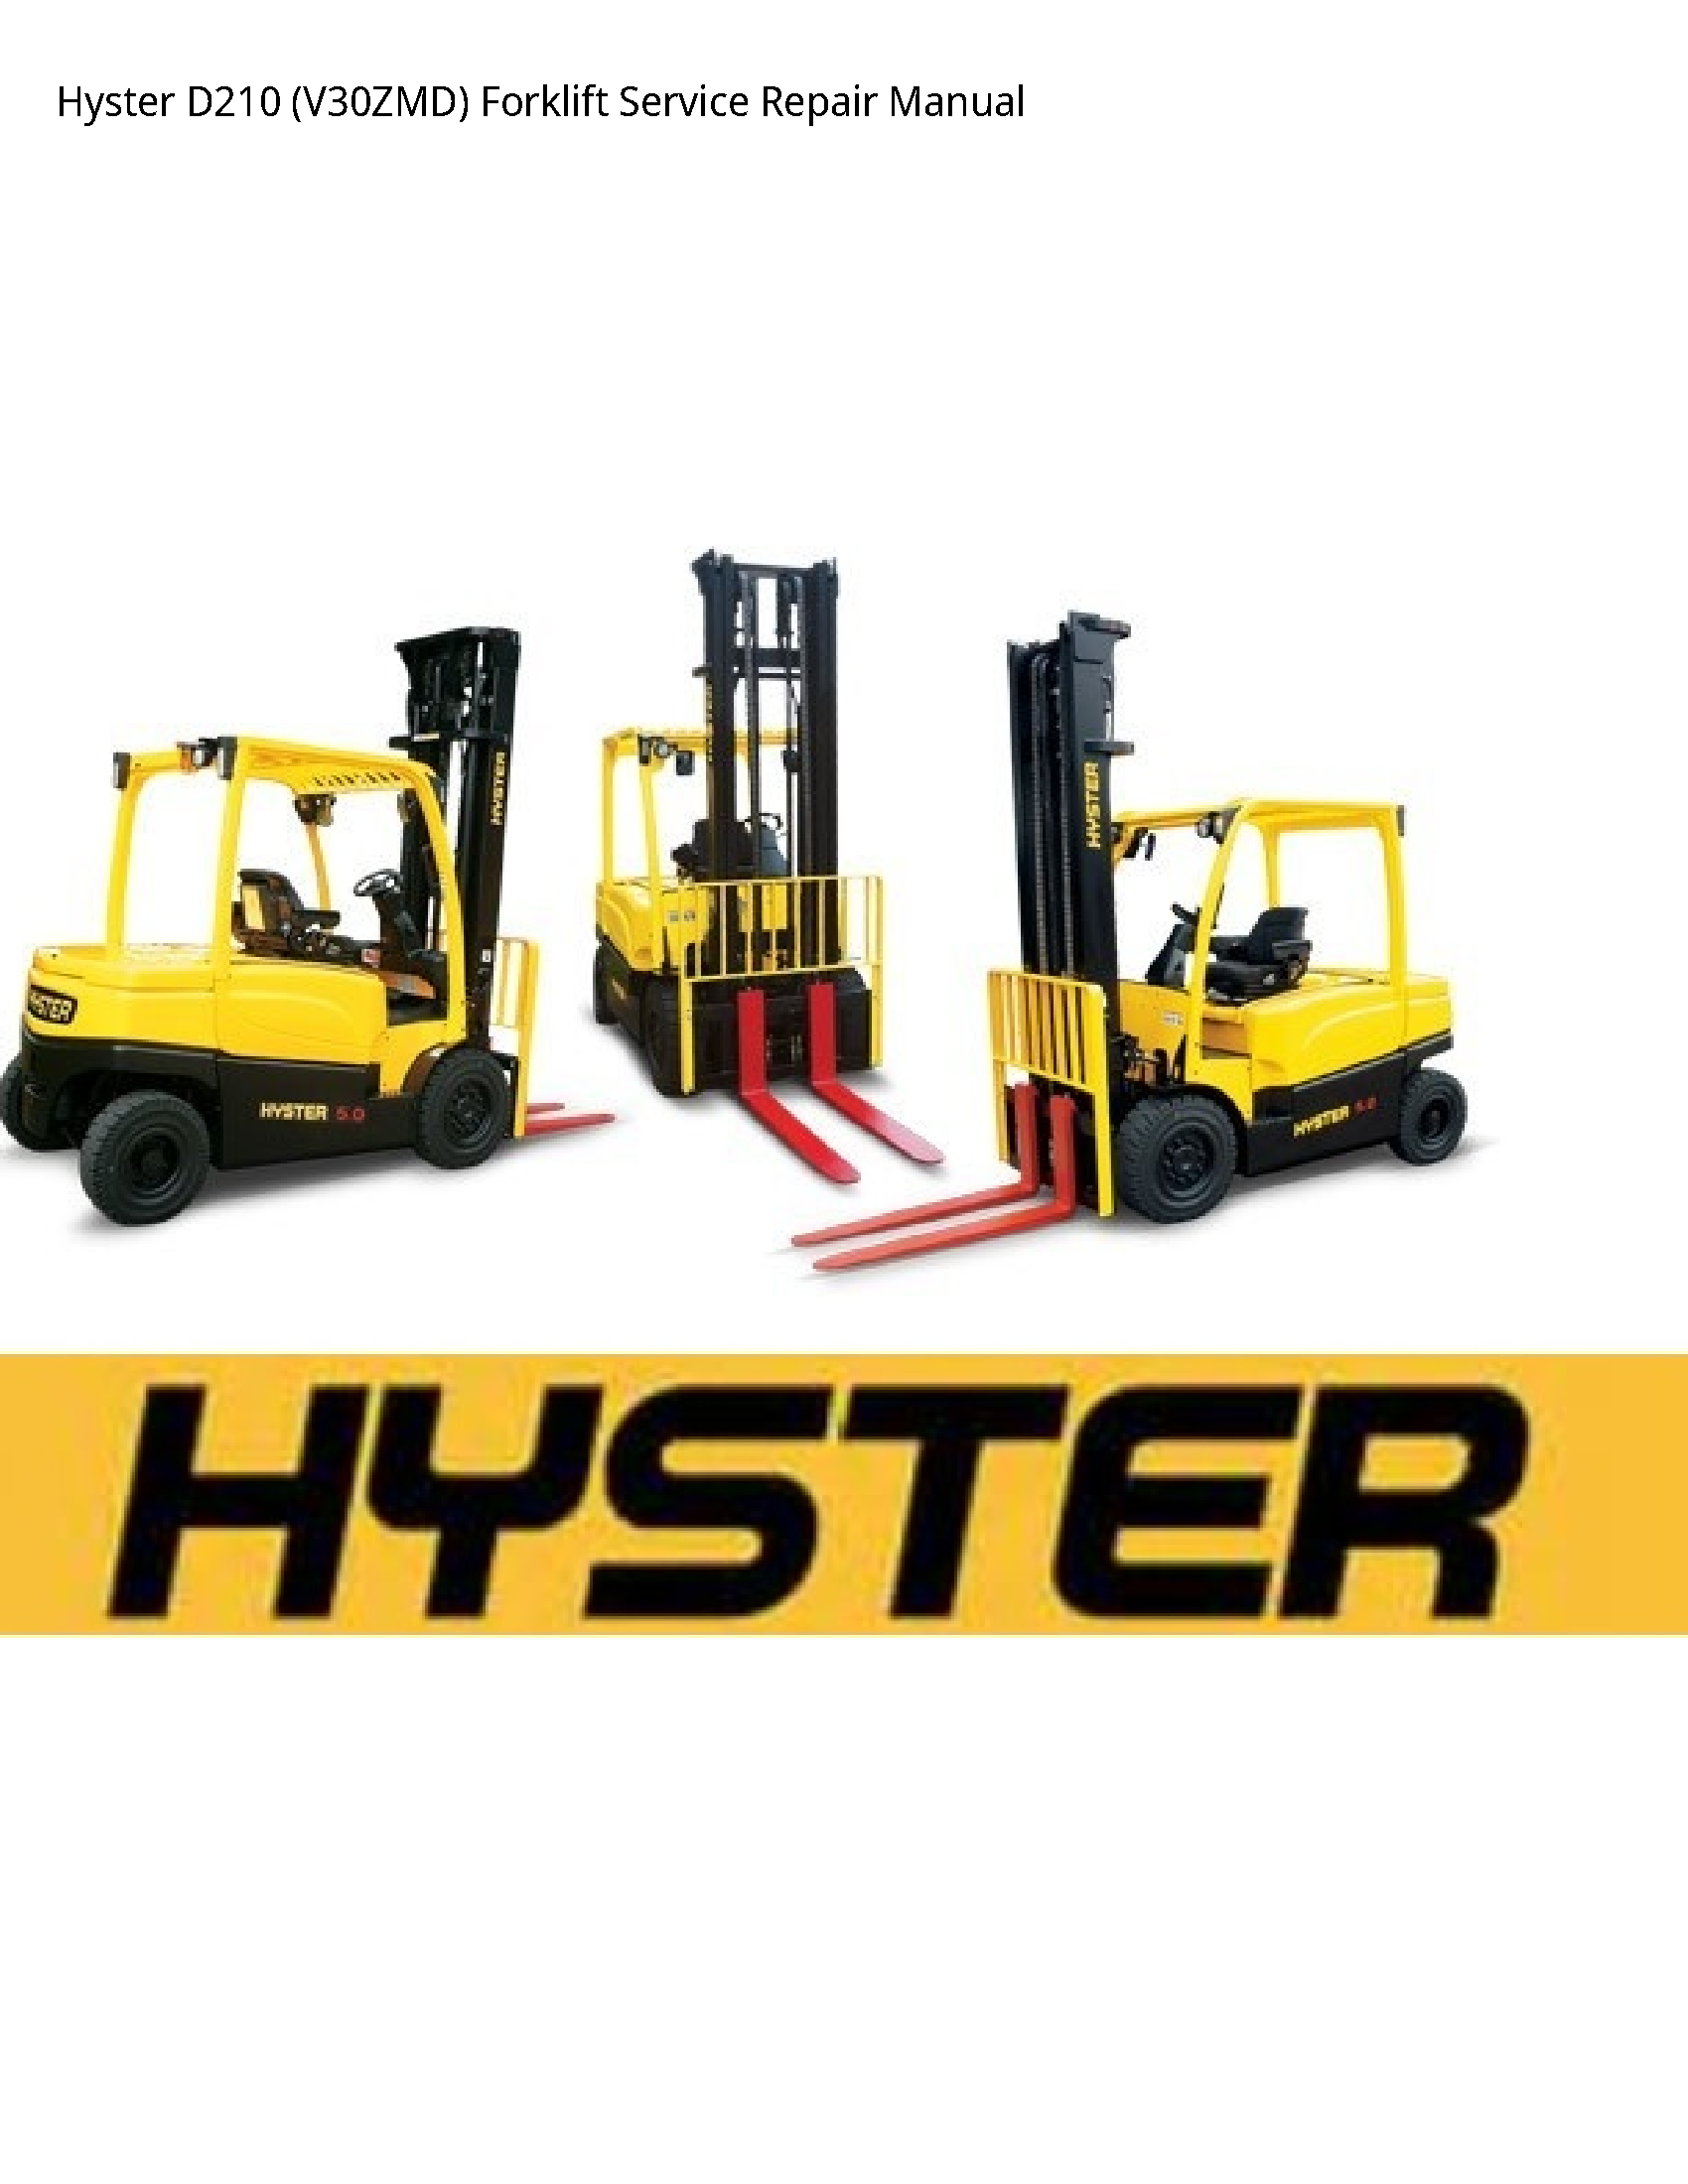 Hyster D210 Forklift manual